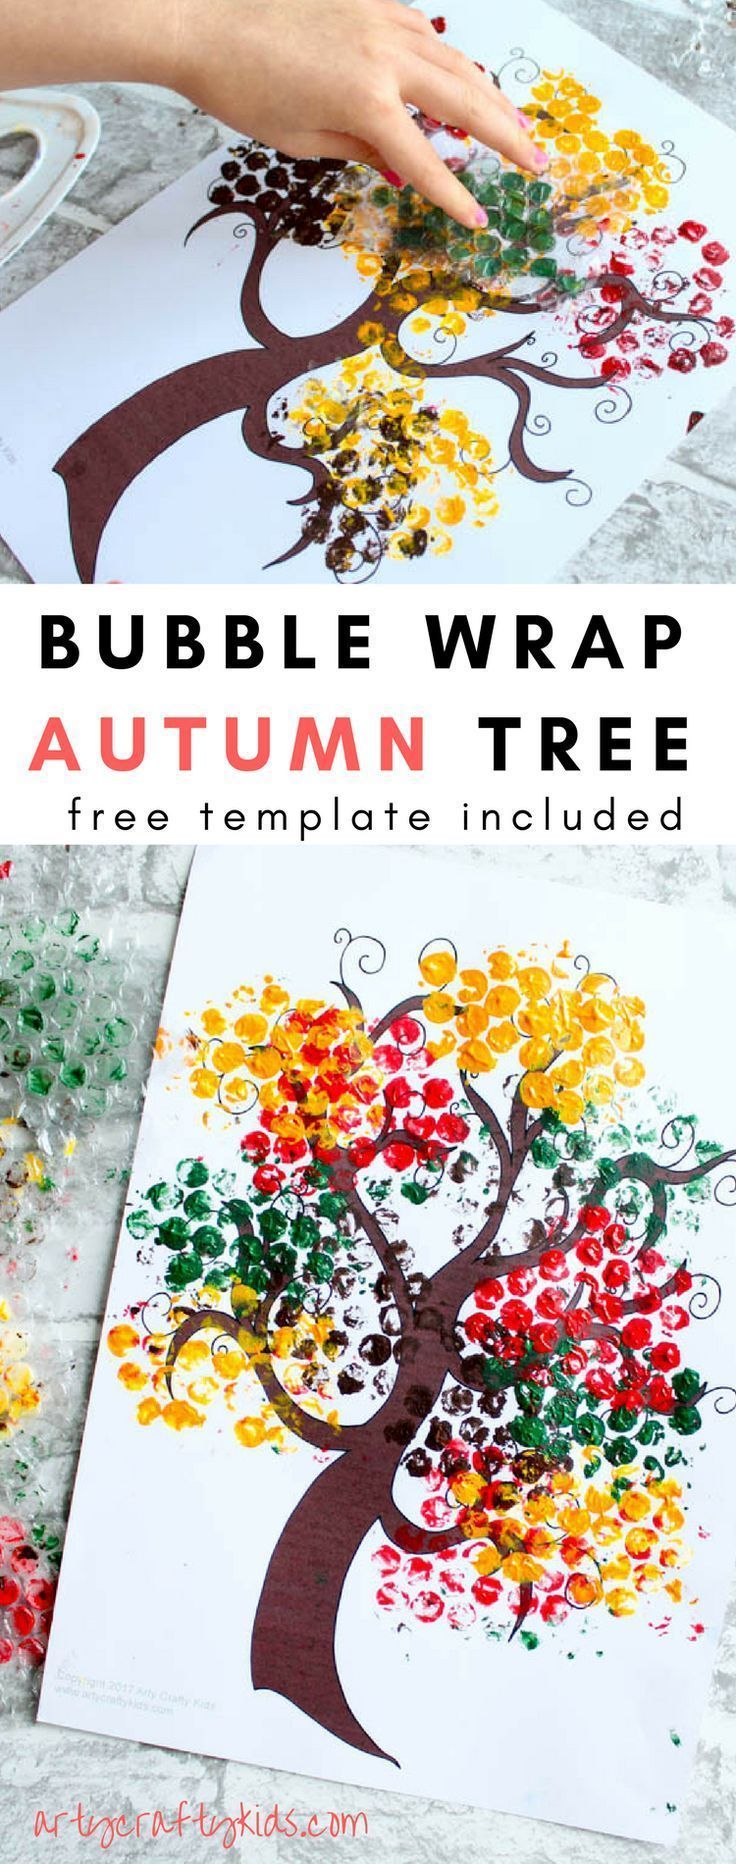 Bubble Wrap Autumn Tree Craft - Bubble Wrap Autumn Tree Craft -   19 diy Kids autumn ideas